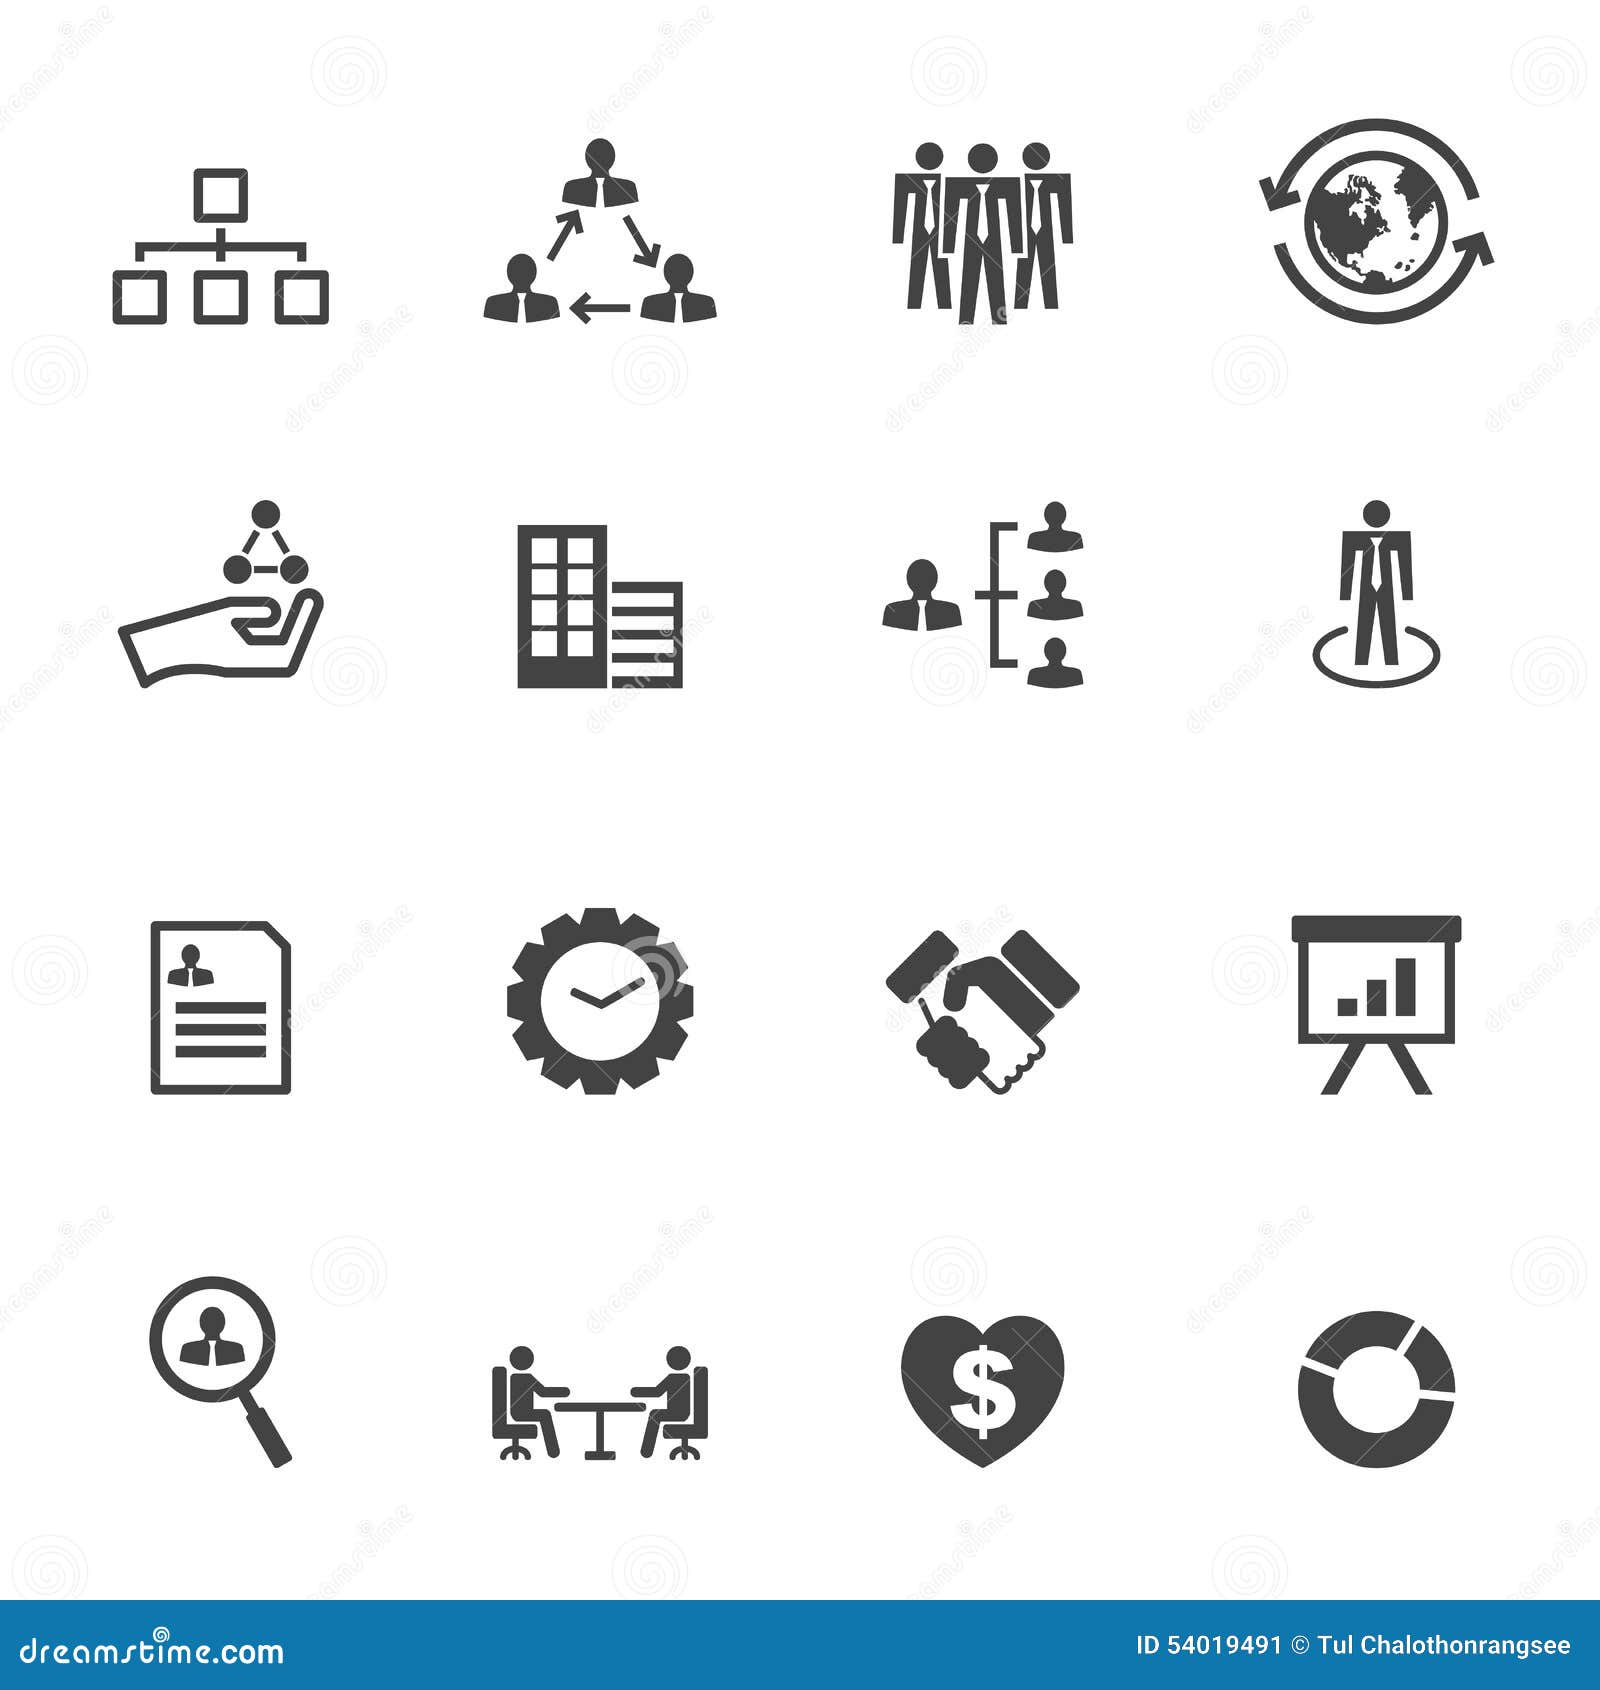 organization icons